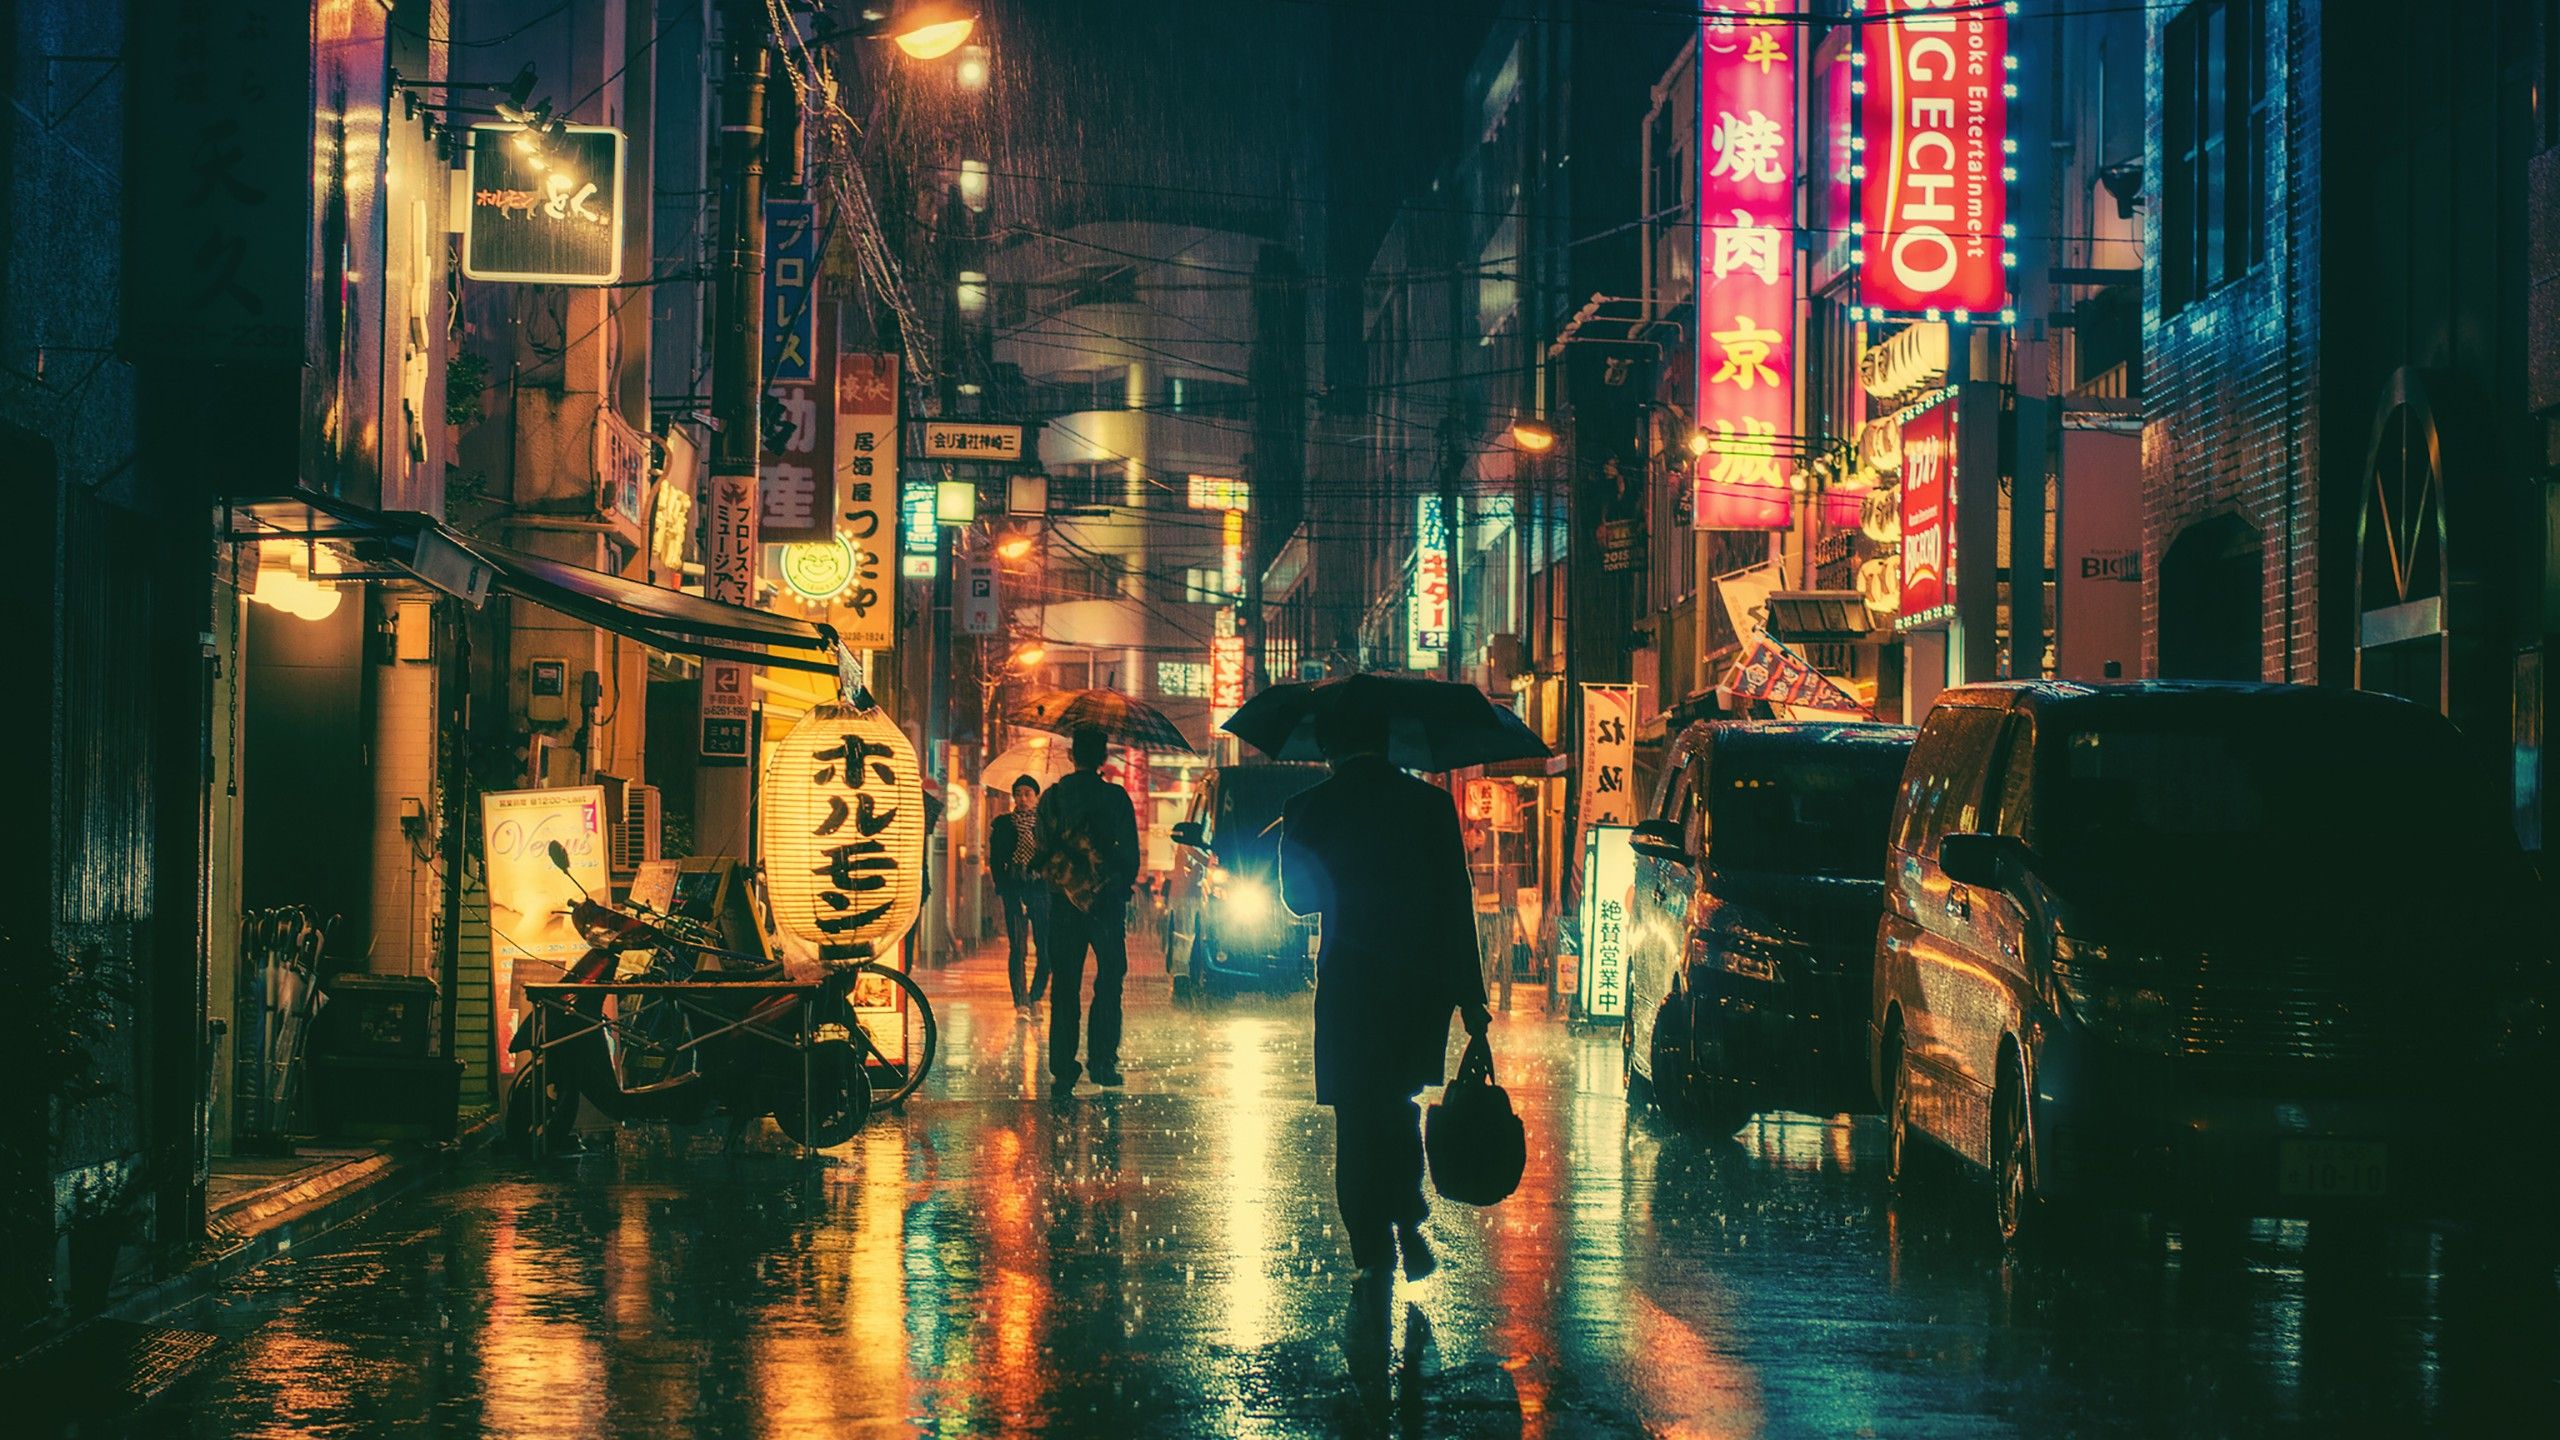 #neon lights, #umbrella, #photography, #Japan, #night